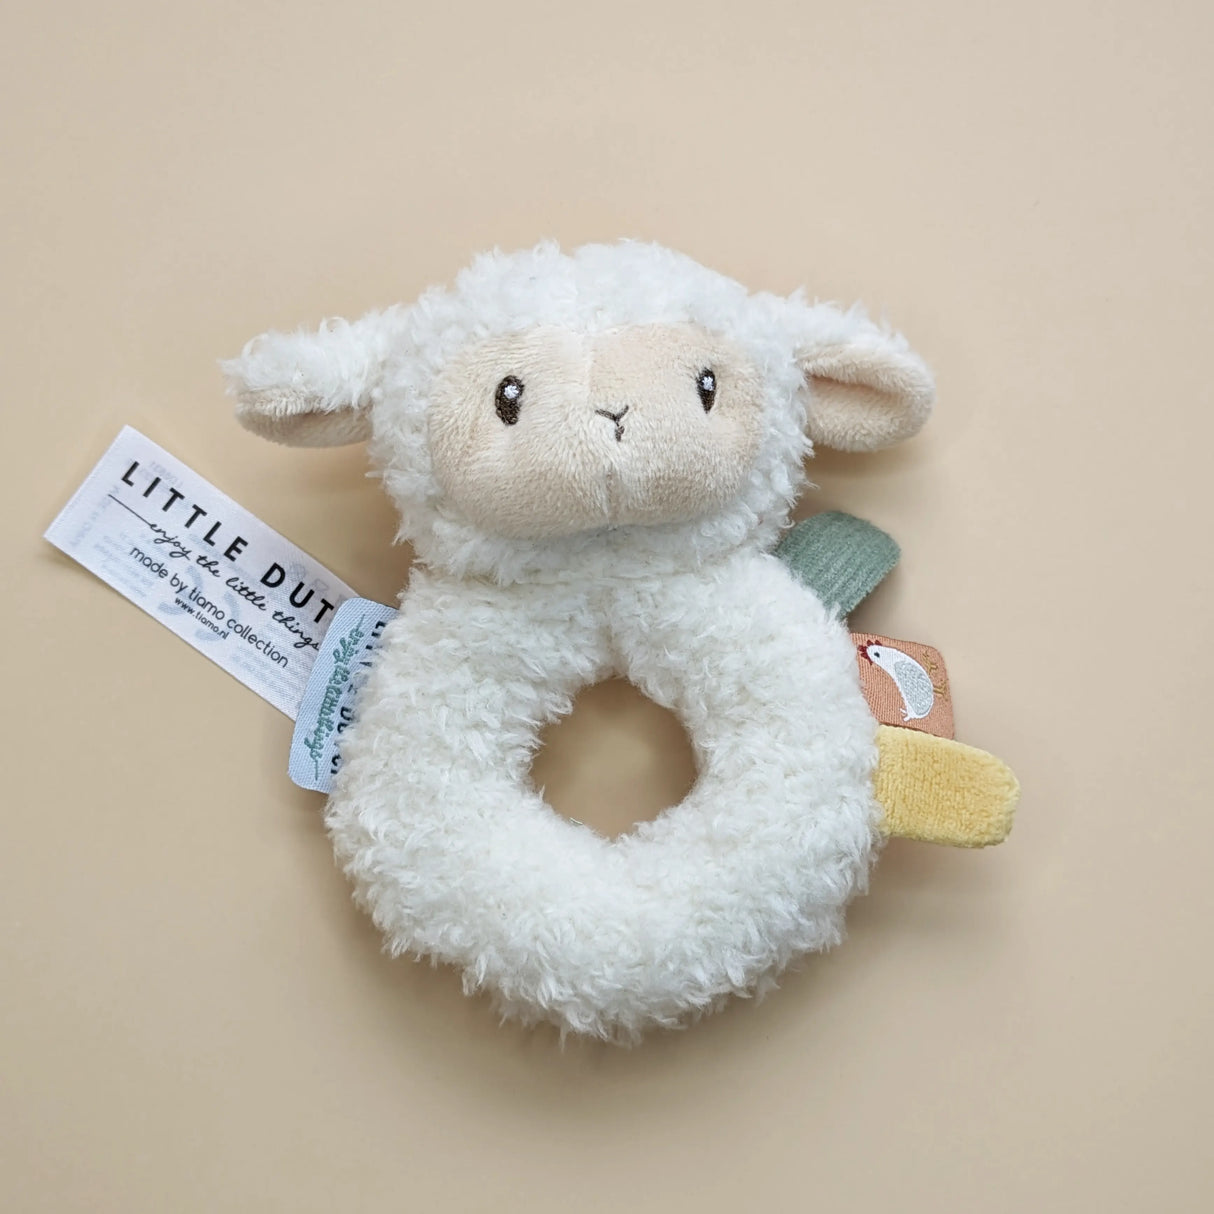 Soft & Sensory Baby Rattle - Little Farm Sheep